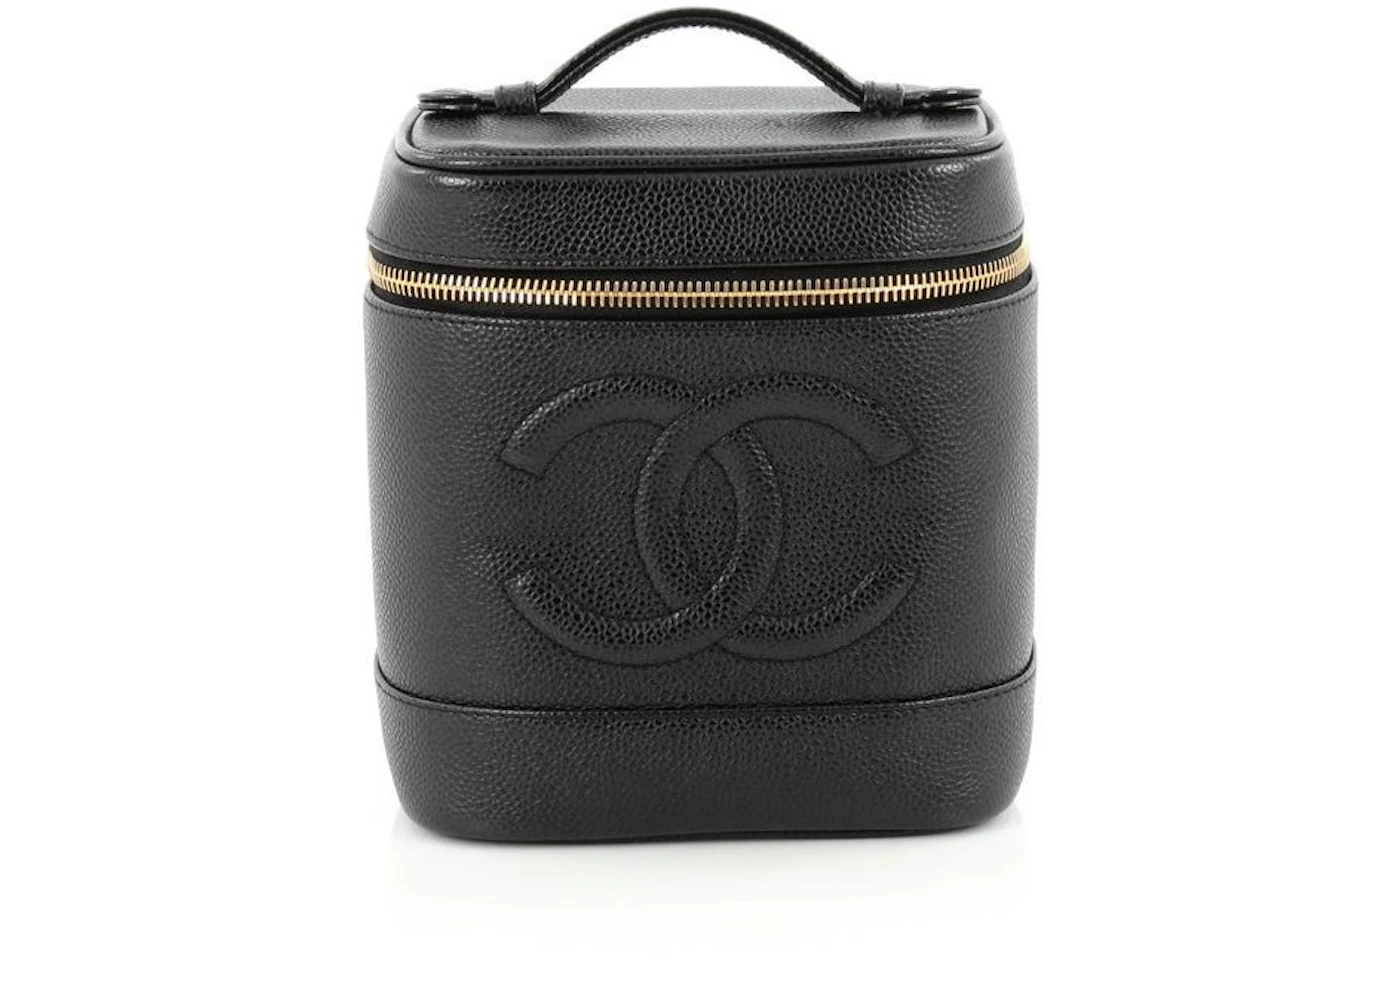 Bag - Skin - Bag - A01998 – dct - ep_vintage luxury Store - Caviar - Pouch  - Cosmetic - Vanity - Твидовый жакет пиджак куртка косуха в стиле chanel -  Black - CHANEL - Hand